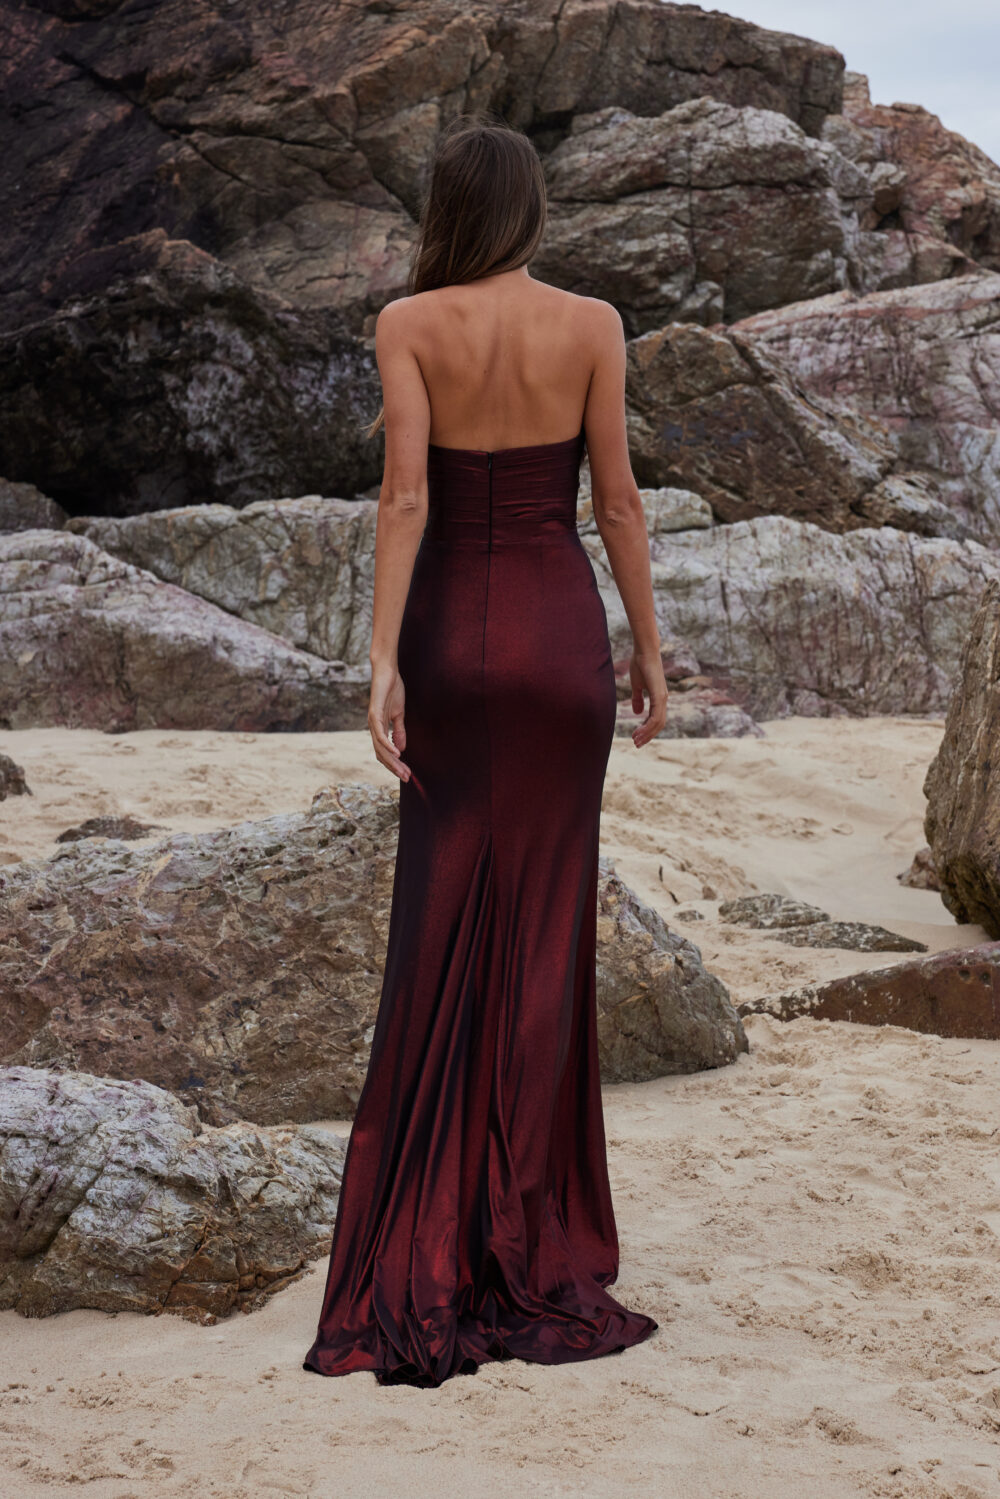 STORM PO955 Evening & Formal dress by Tania Olsen Designs